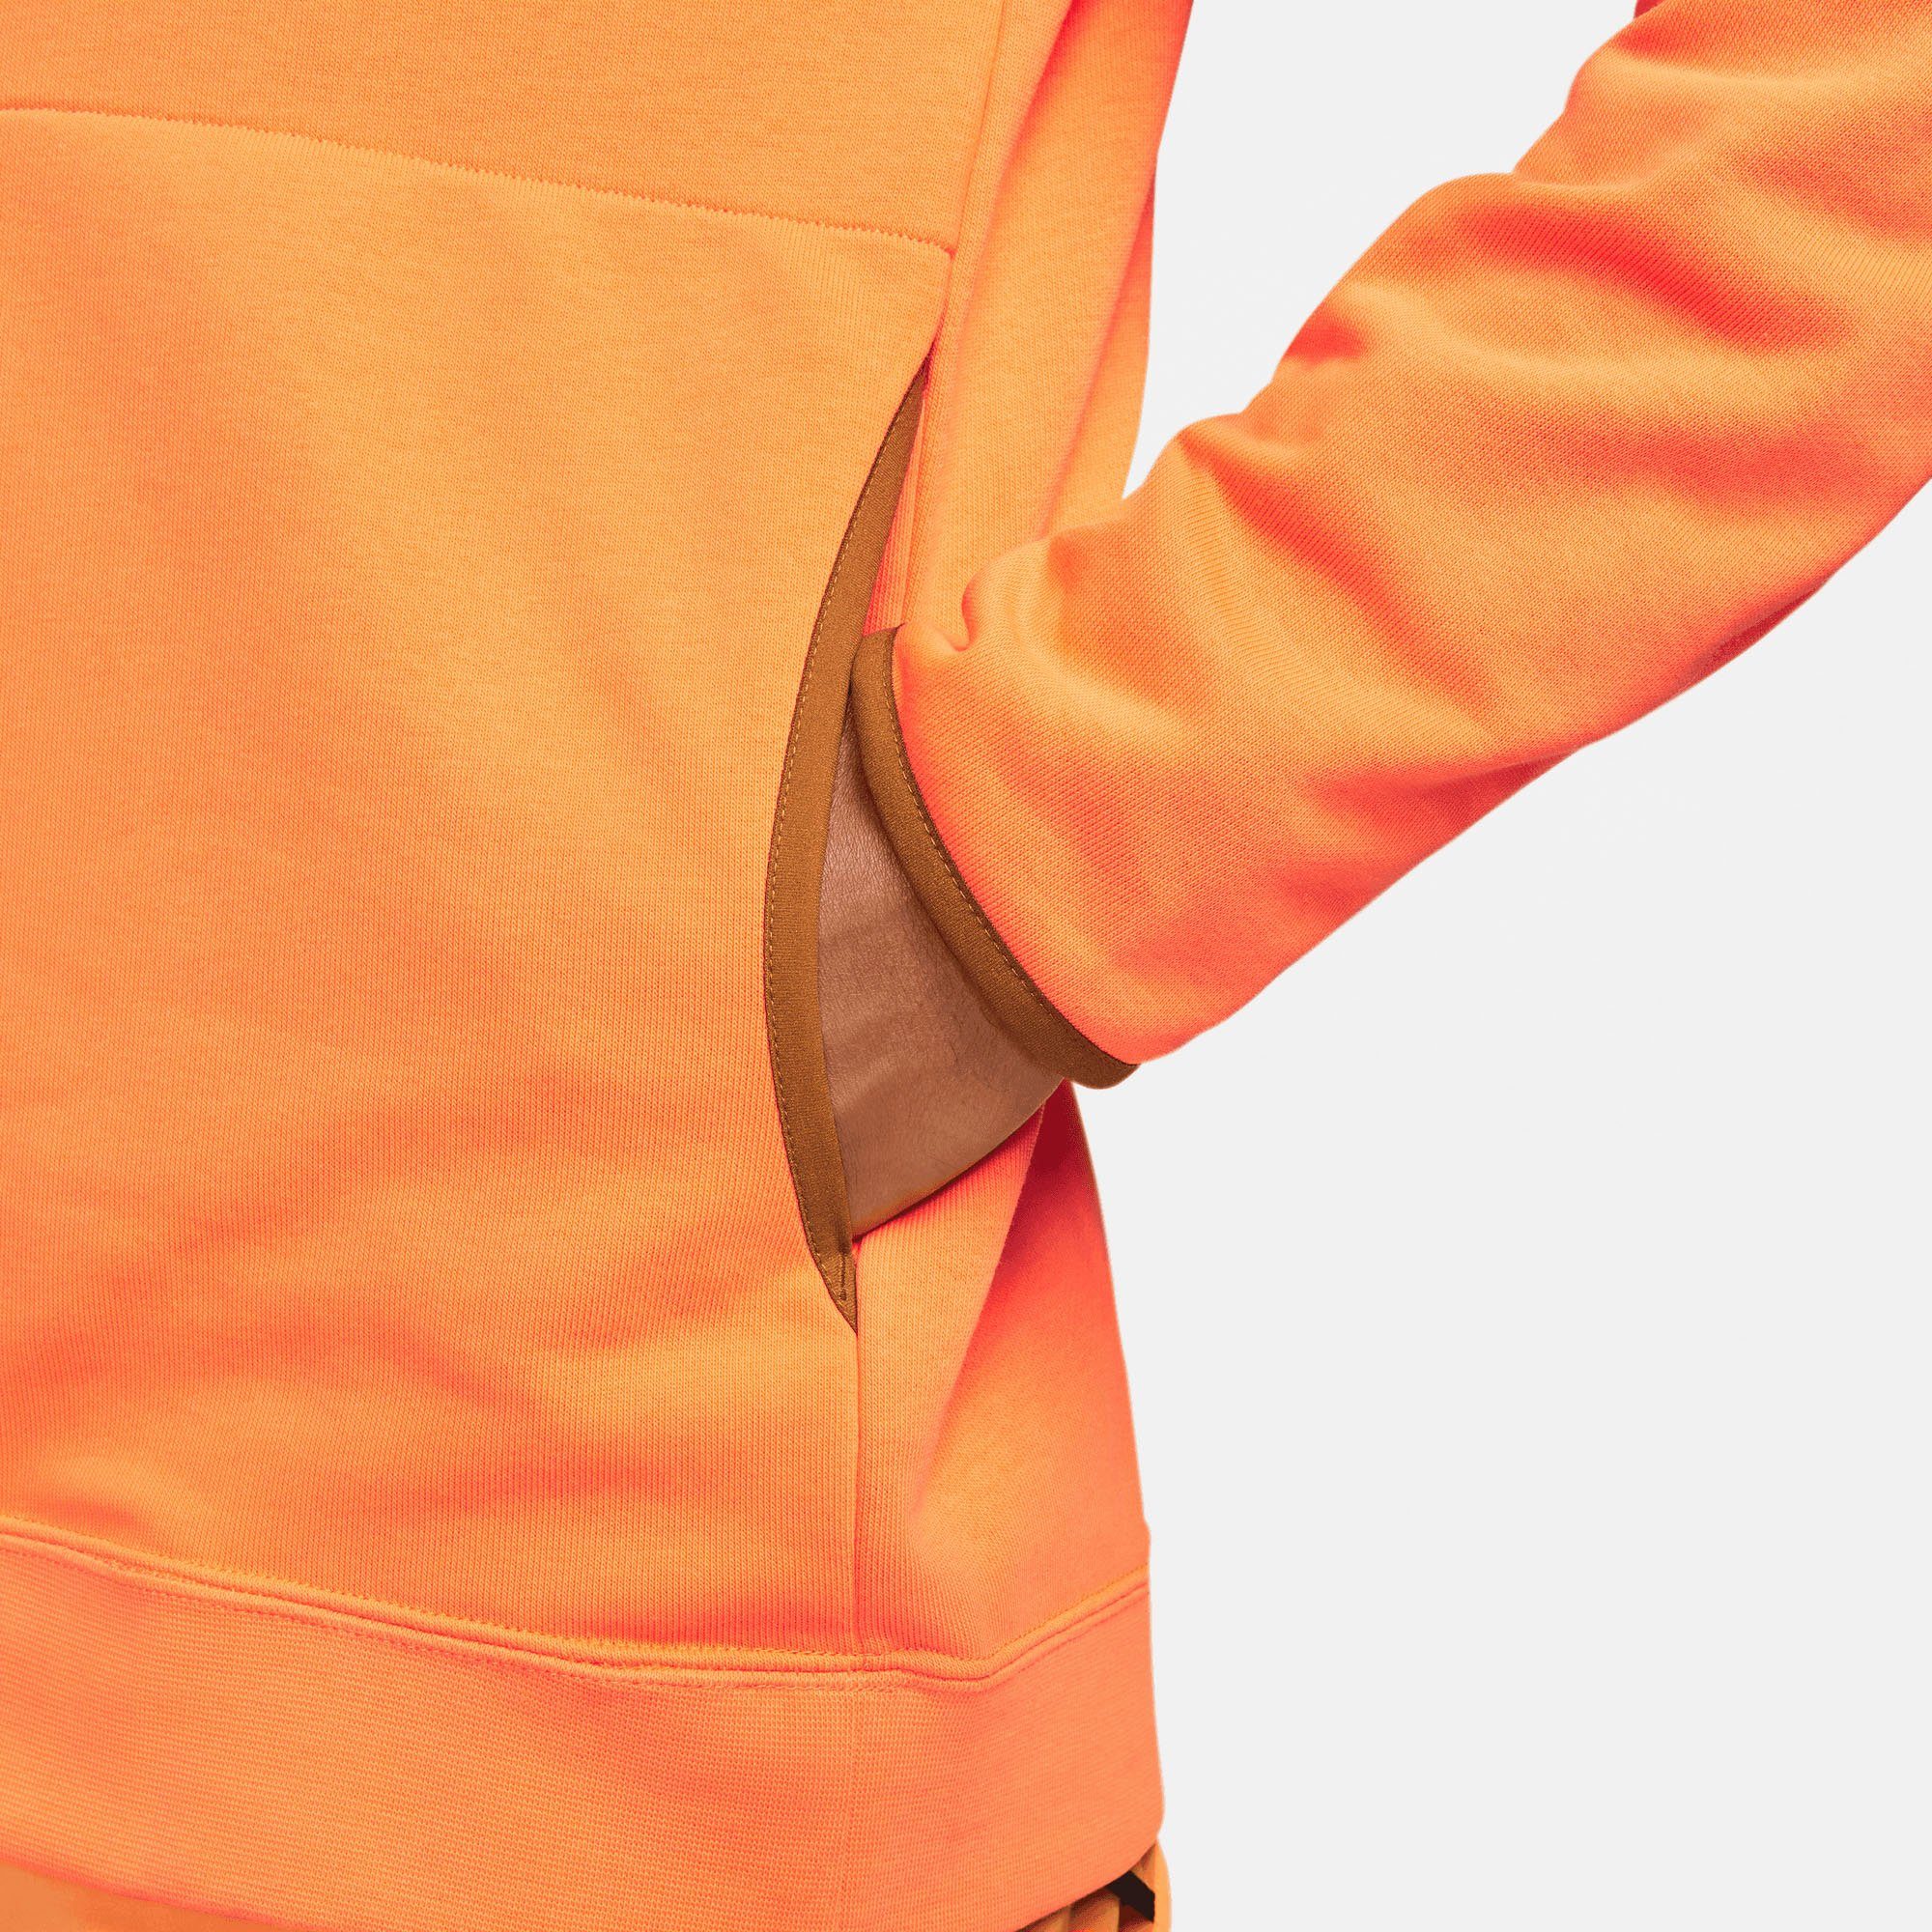 PULLOVER orange HOODIE TRAIL Kapuzensweatshirt Nike DRI-FIT RUNNING MAGIC MEN'S HOUR TRAIL